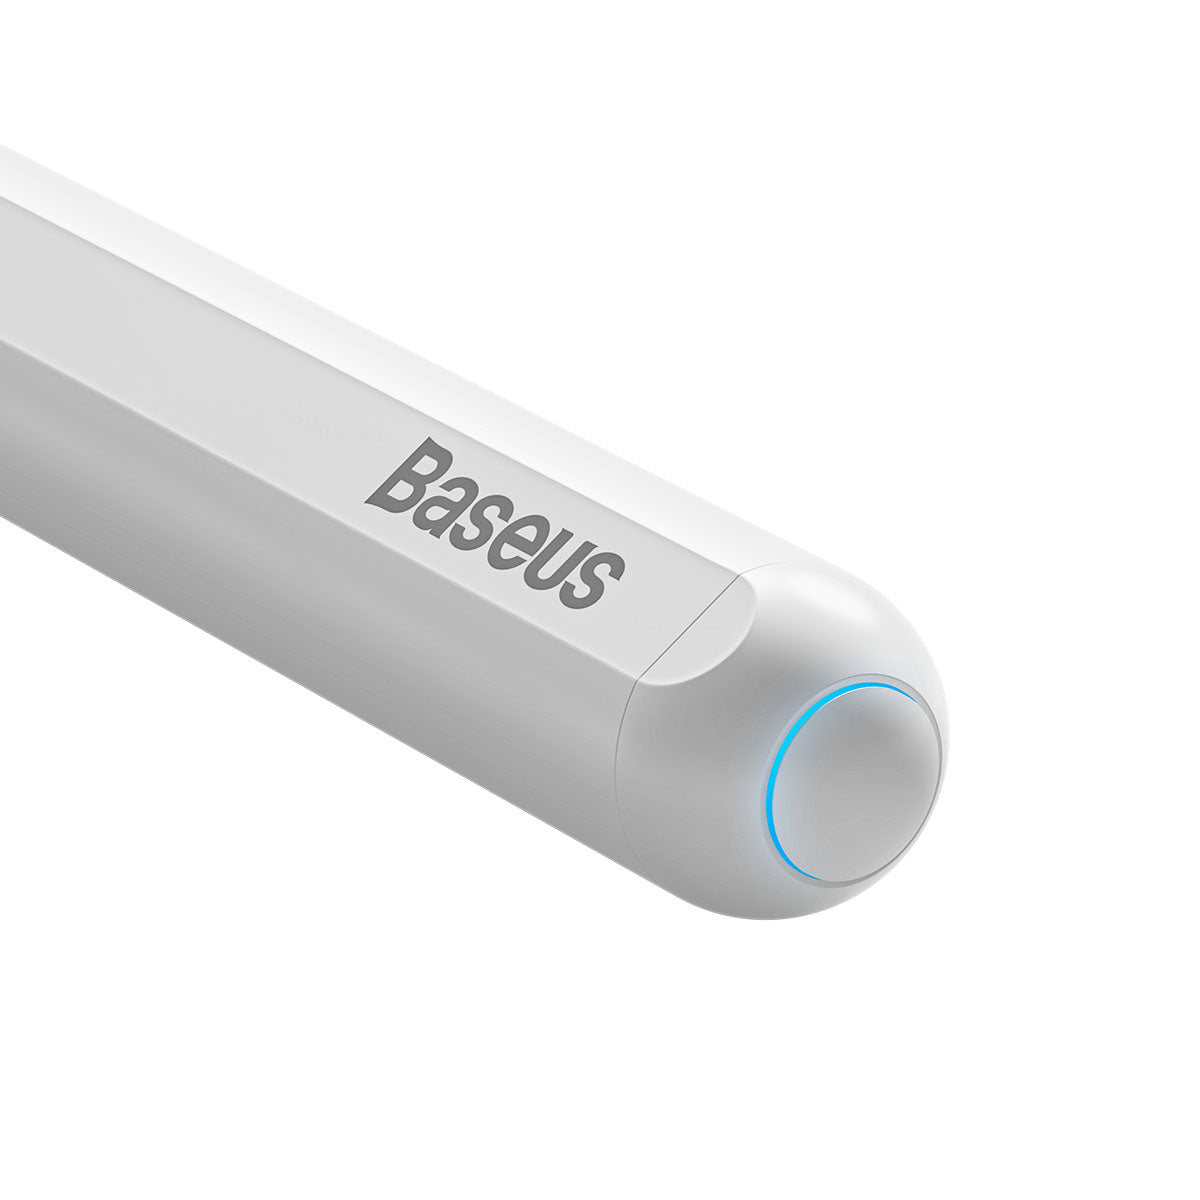 Baseus Smooth Writing 2 Series Wireless Charging Stylus Pen